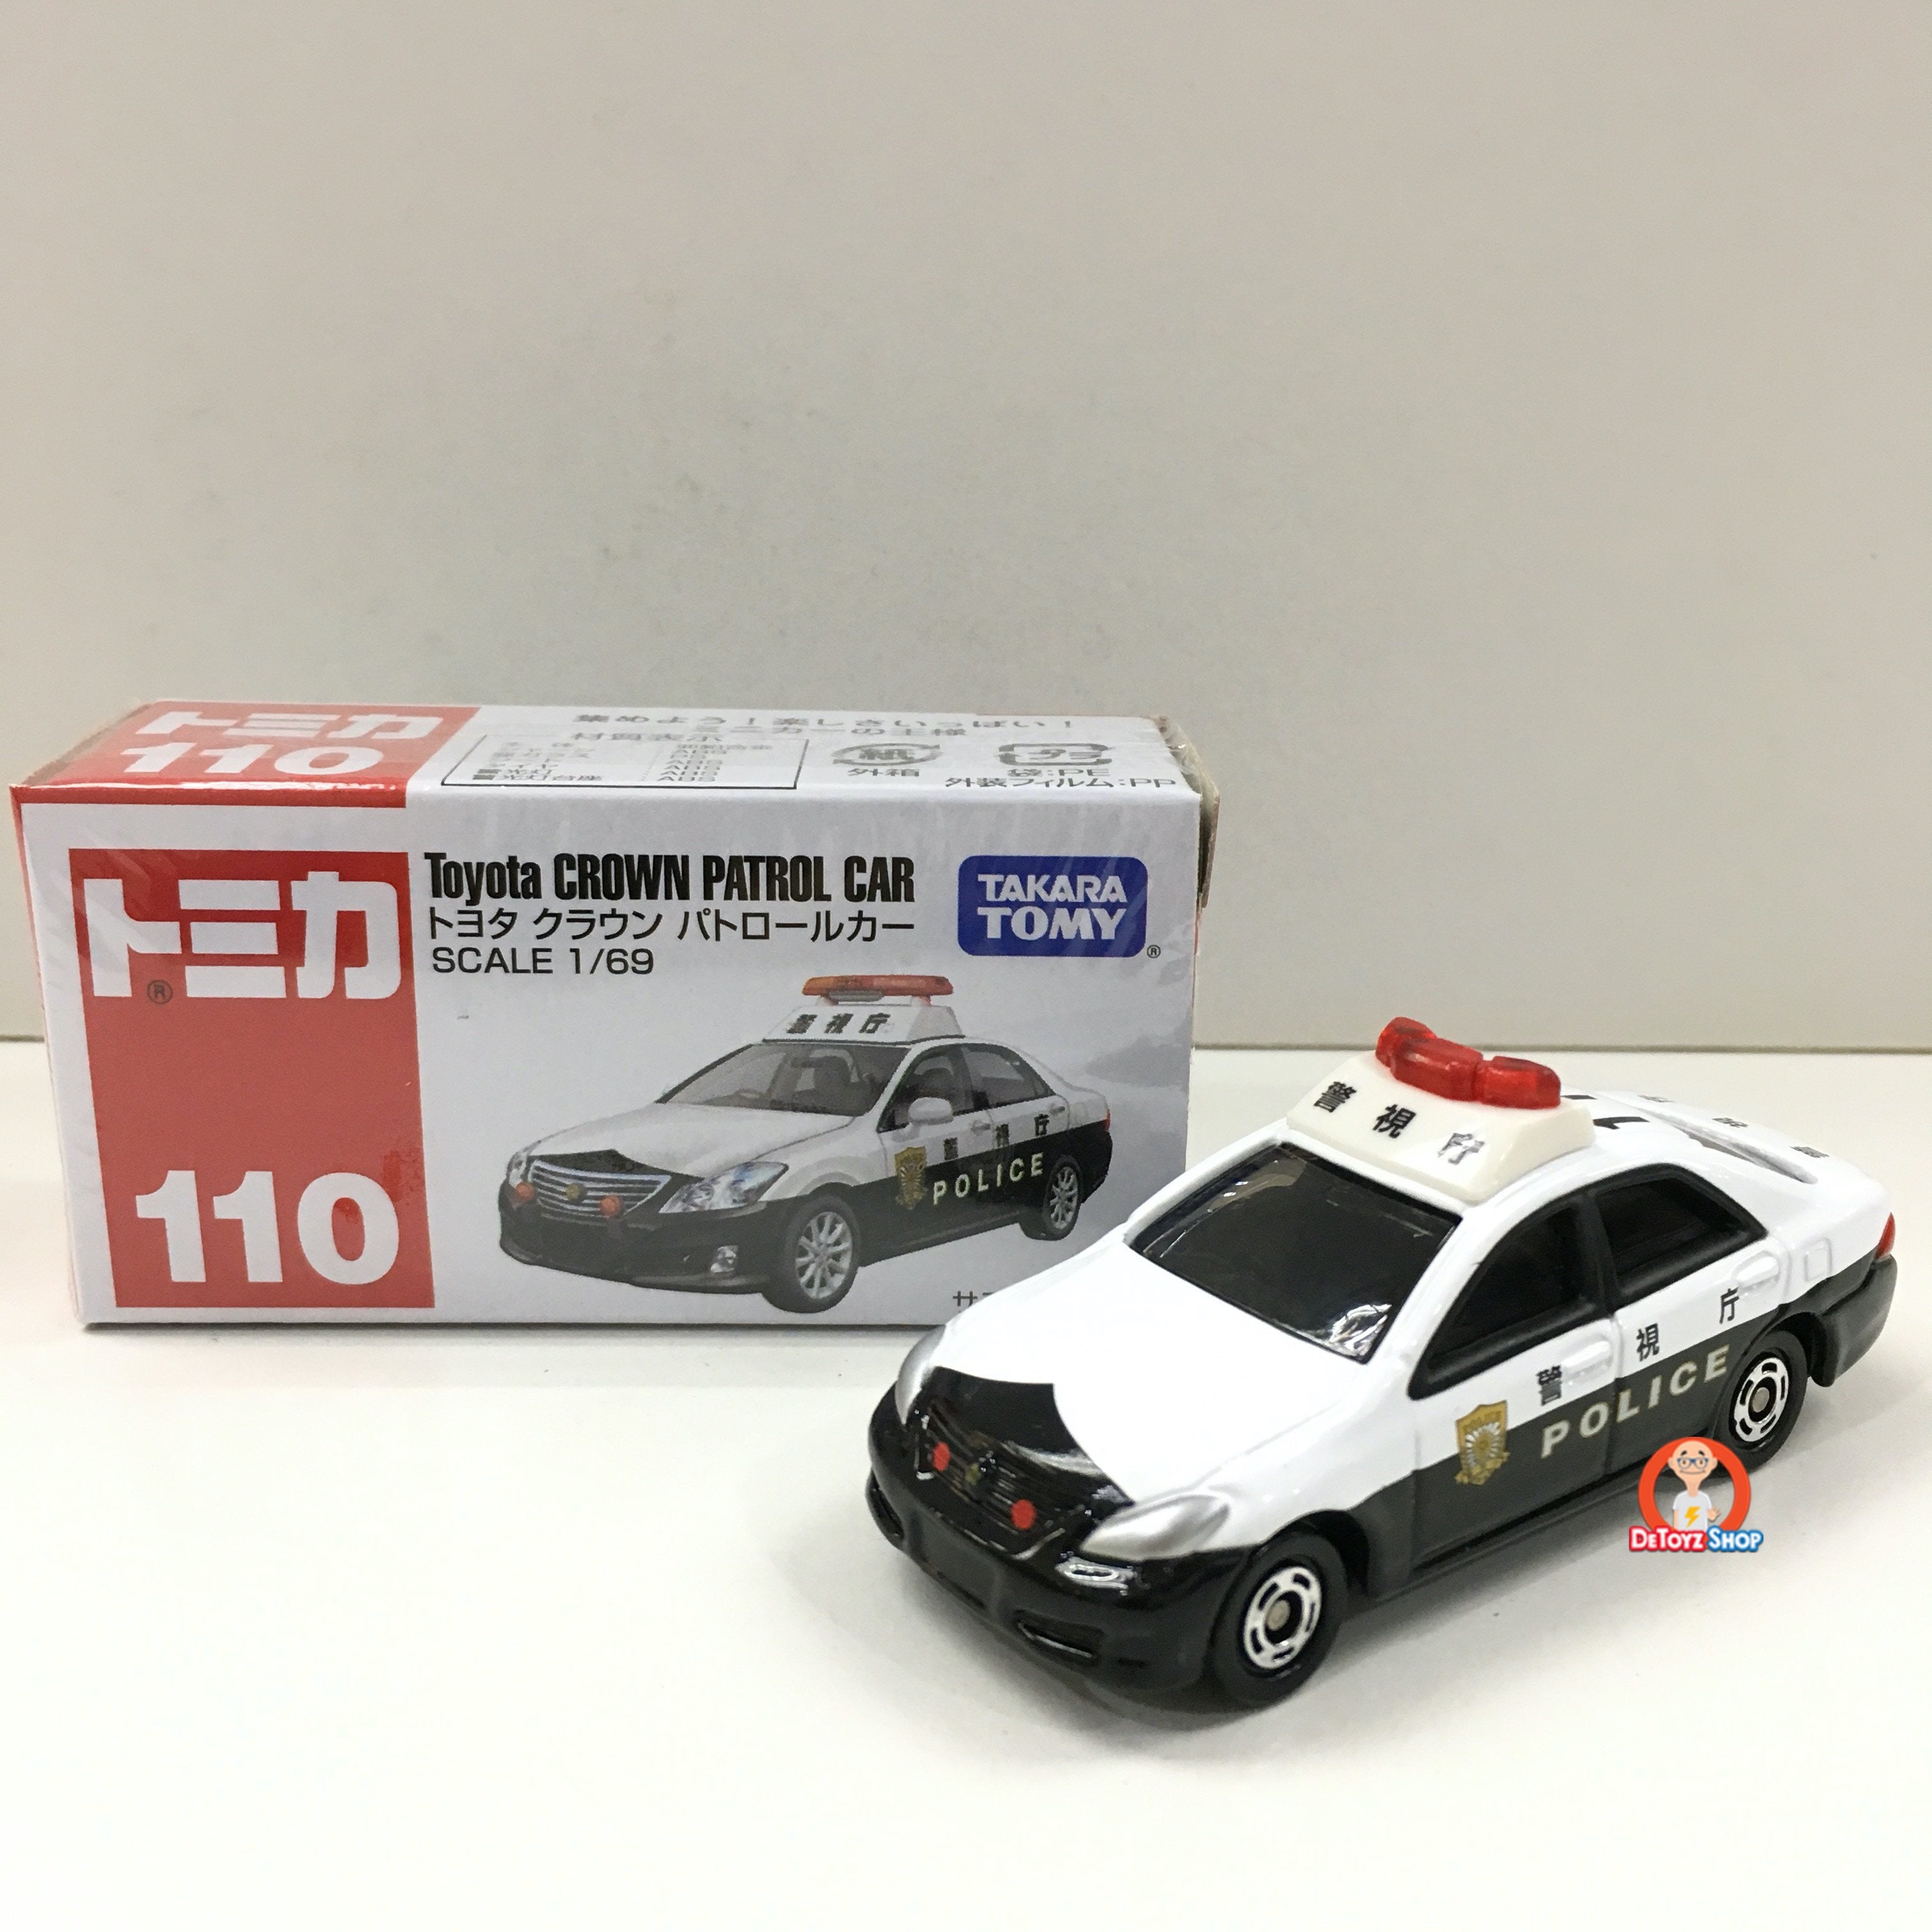 Tomica #110 Toyota Crown Patrol Car